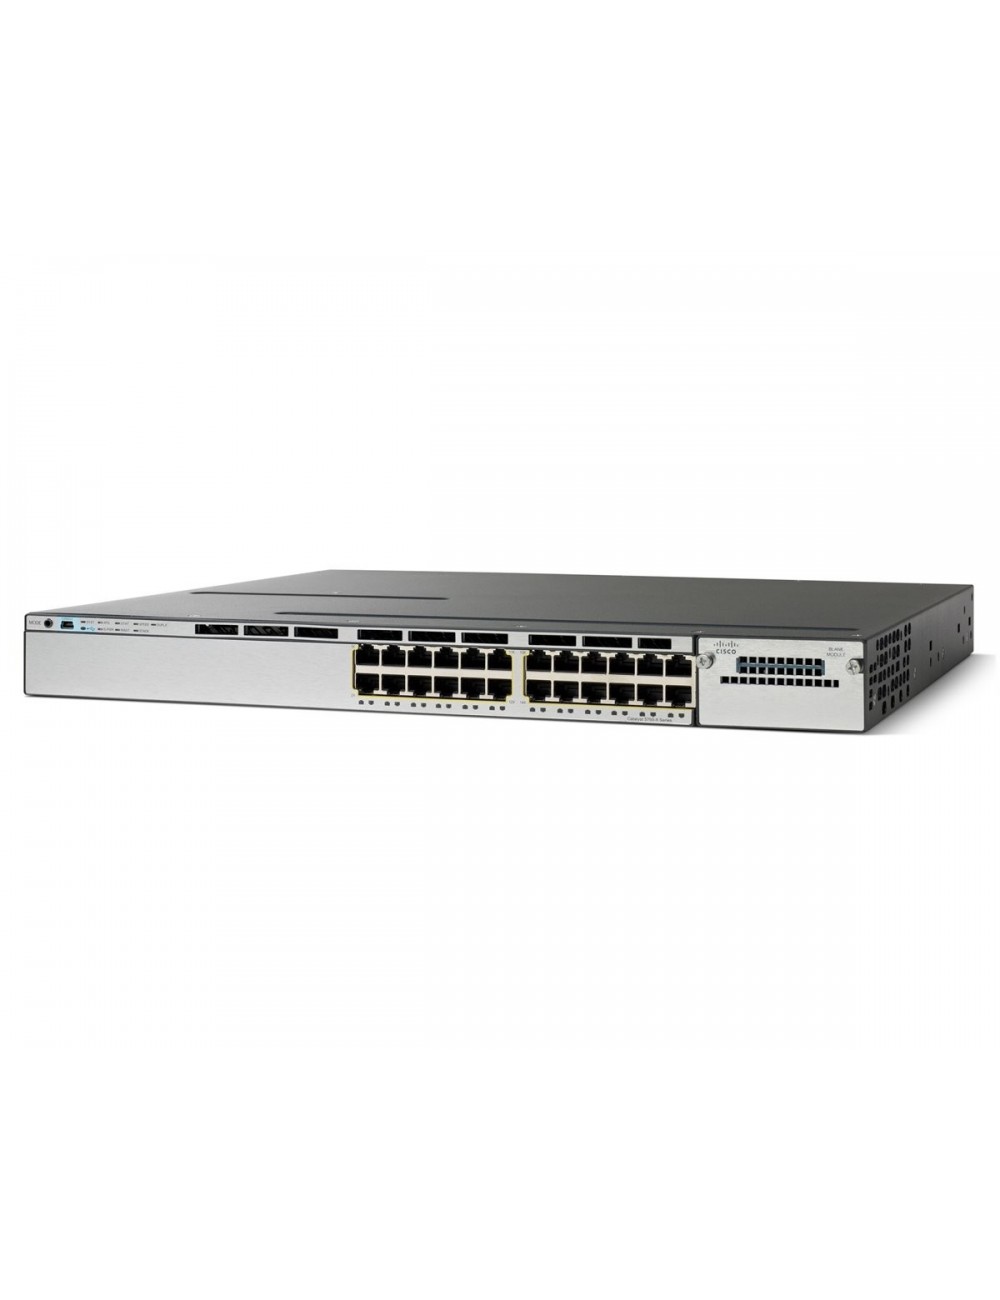 WS-C3750X-24T-E Cisco managed gigabit stackable switch